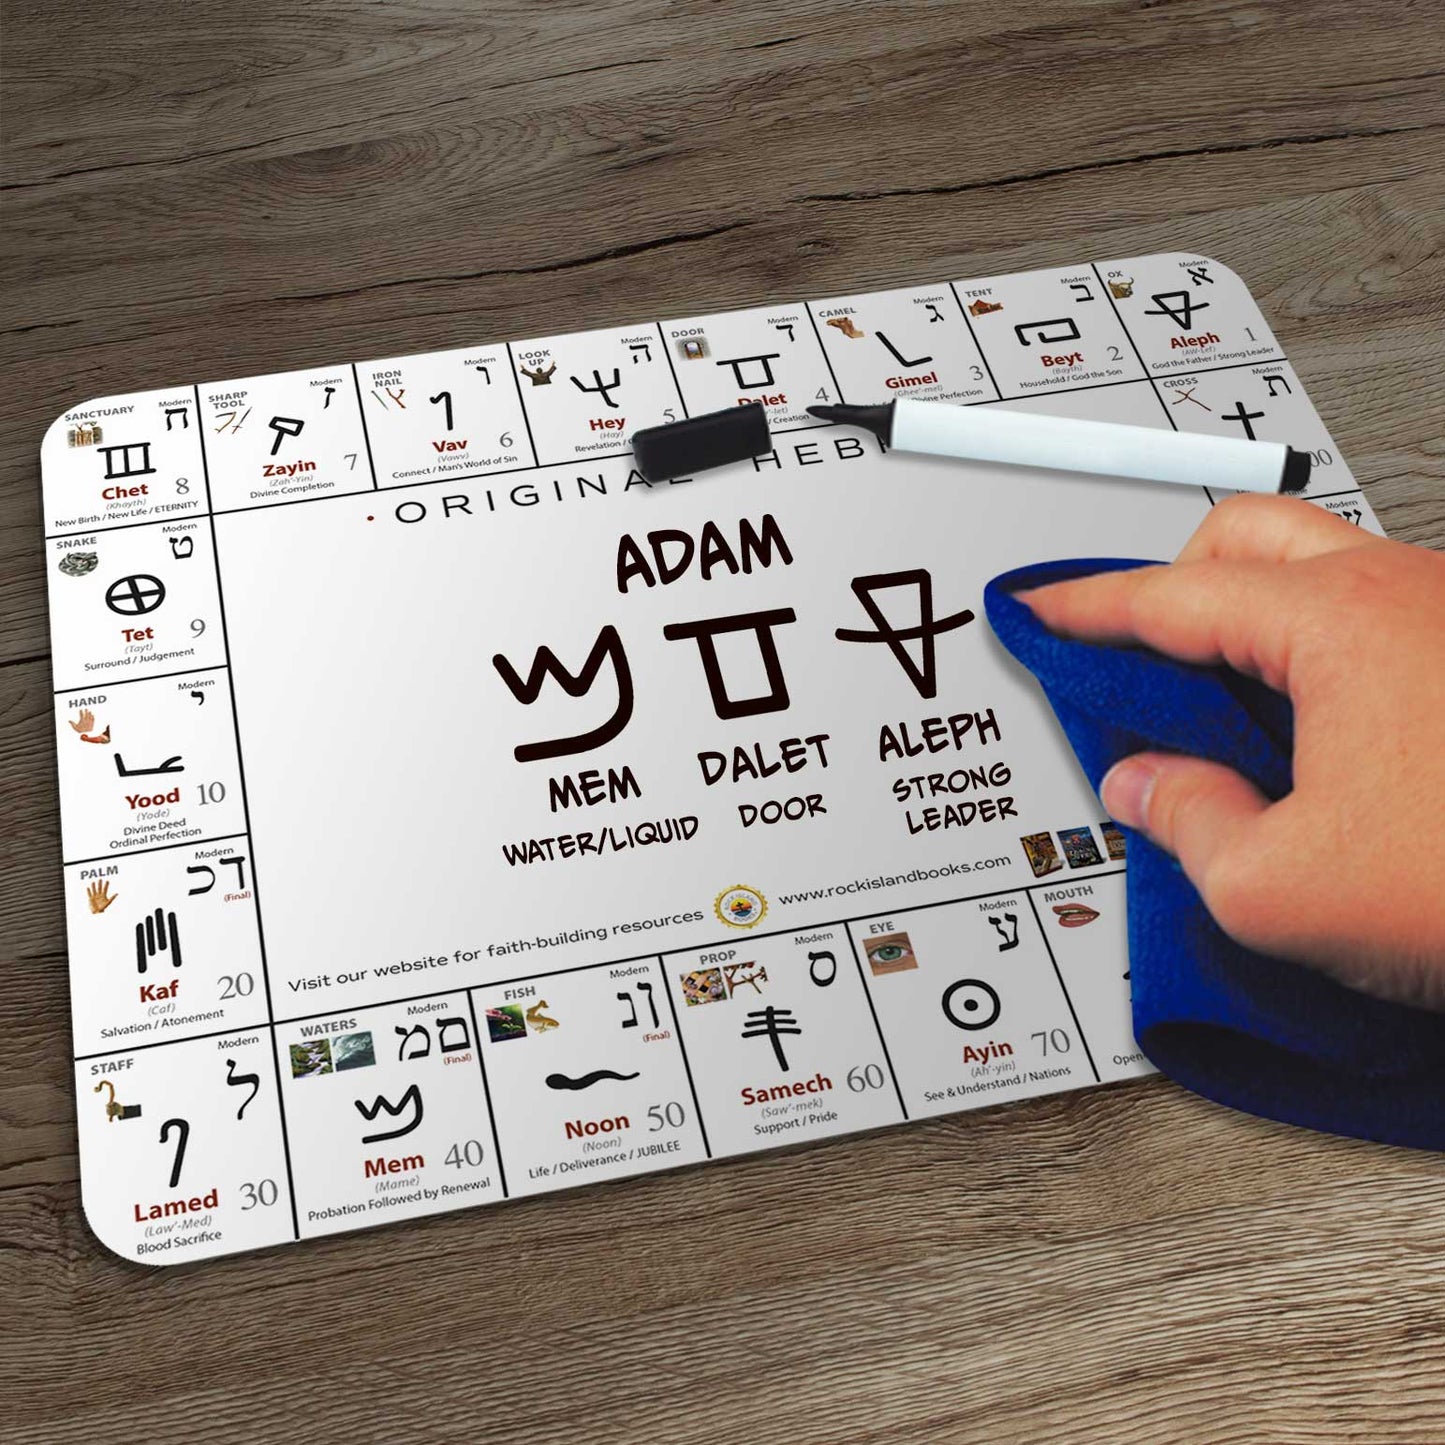 Double-Sided (Modern/Original) Hebrew Letter Practice Dry Erase Board w/ Pen